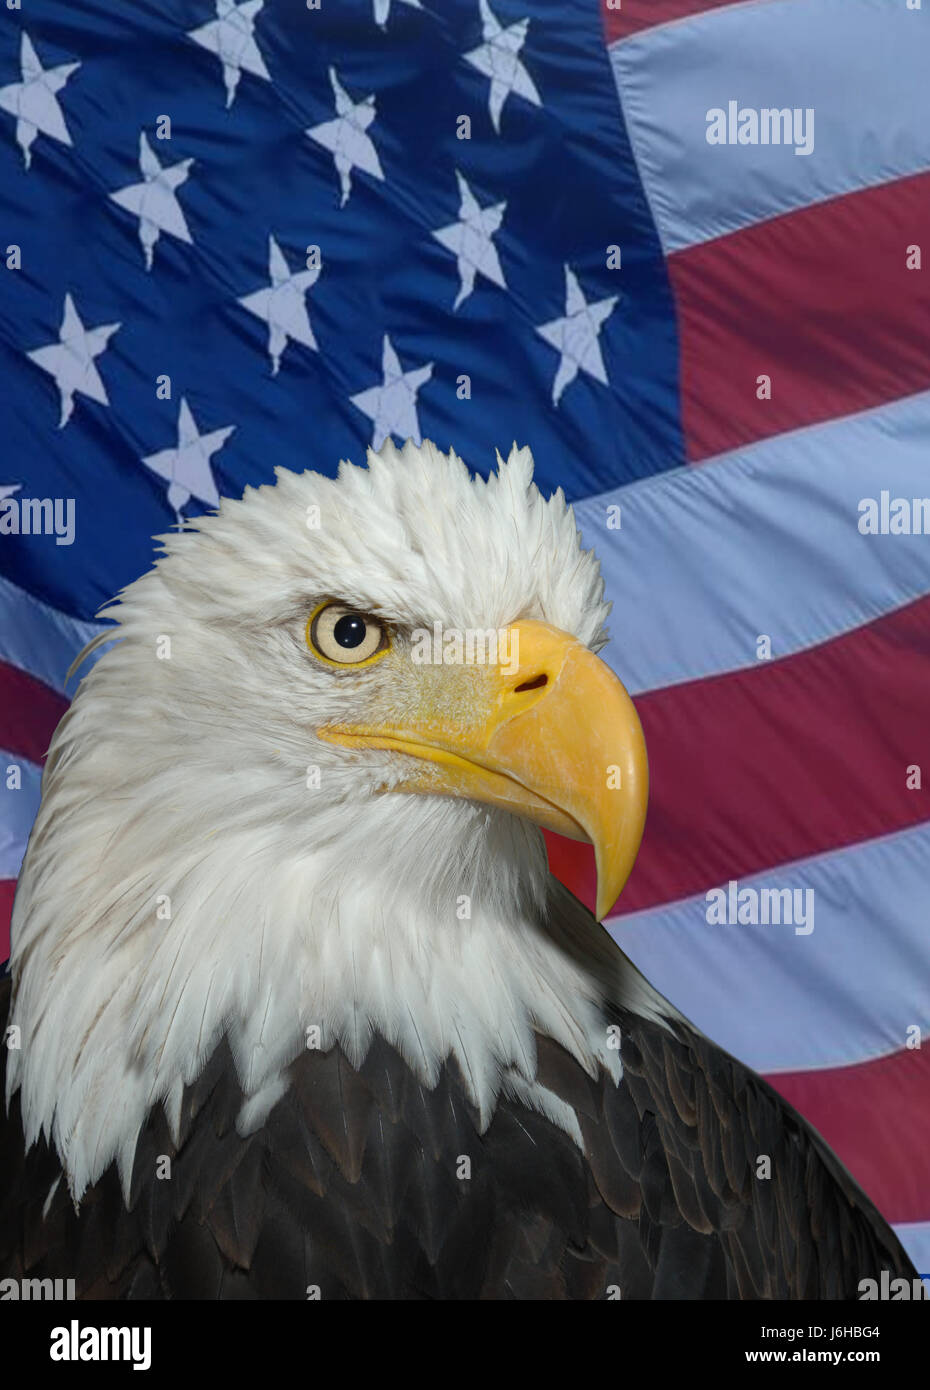 american animal bird america beak flag eagle bald american flight animal bird Stock Photo